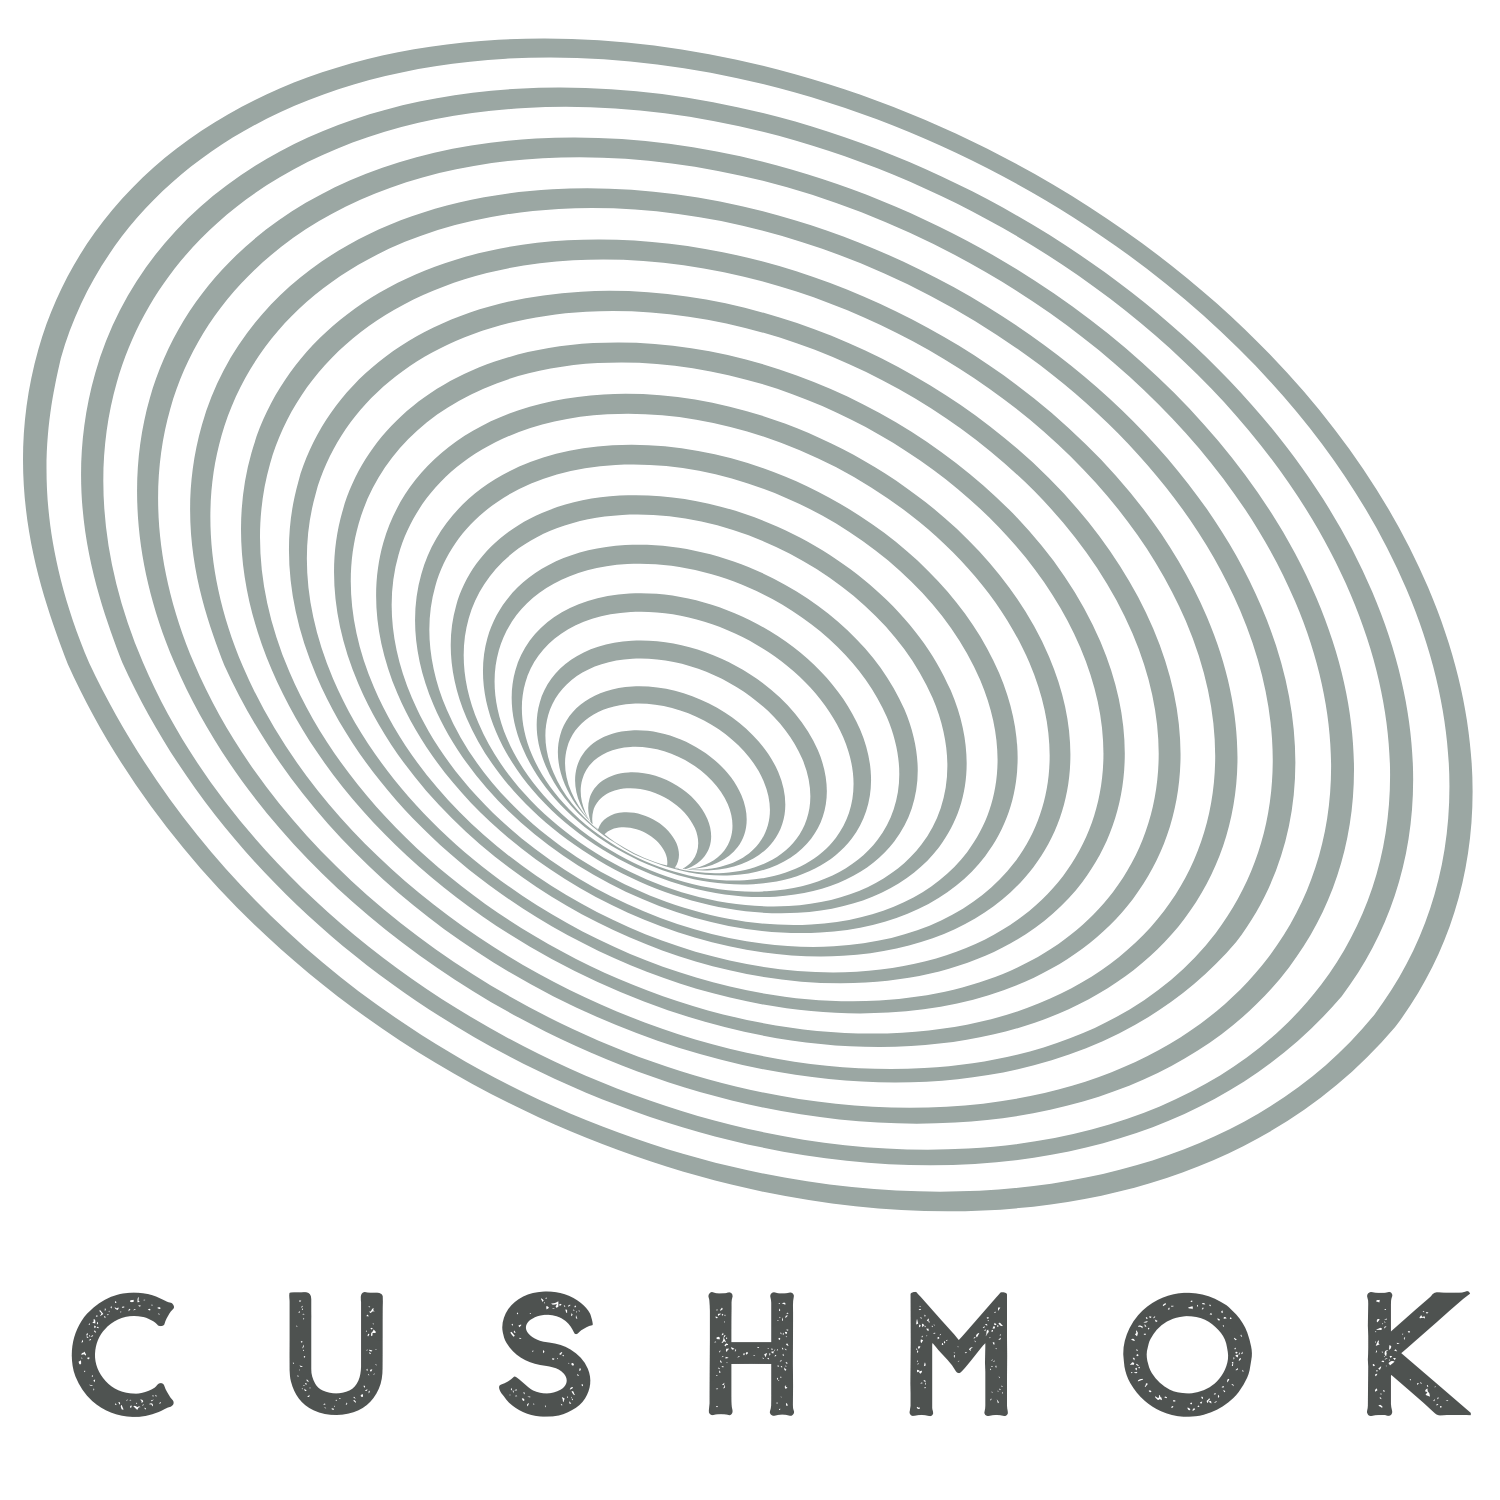 CushmoK